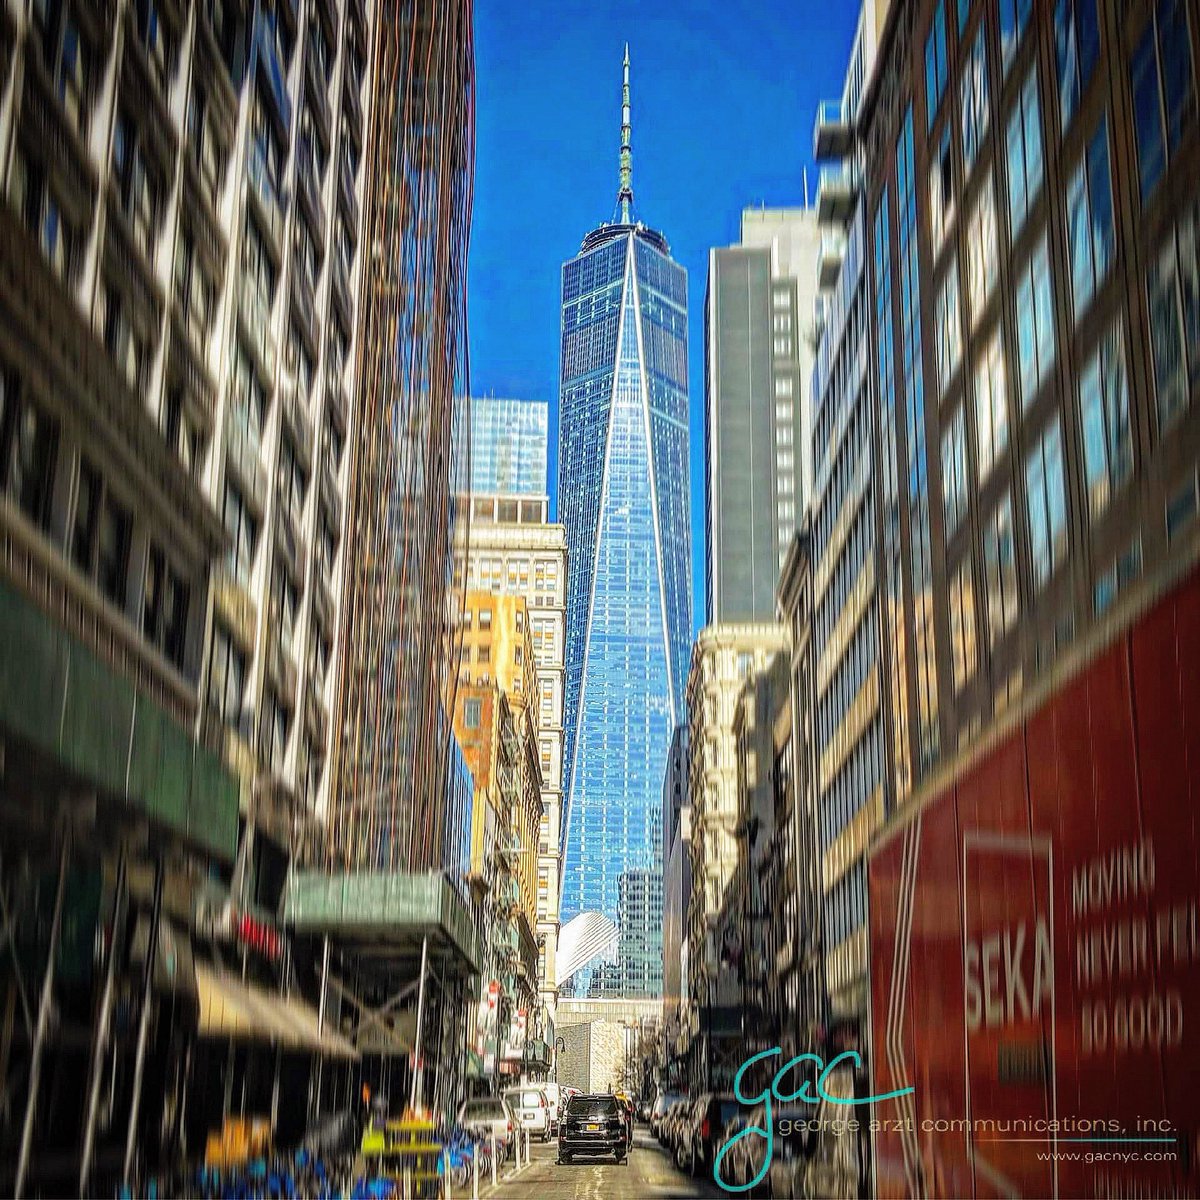 The Freedom Tower is just consistently glorious.

#georgearzt #georgearztcommunications #freedomtower #worldtradecenter #lowermanhattan #nyc #newyork #newyorkcity #newyorkarchitecture #nycarchitecture #newyorkskyline #nycskyline @OneWTC